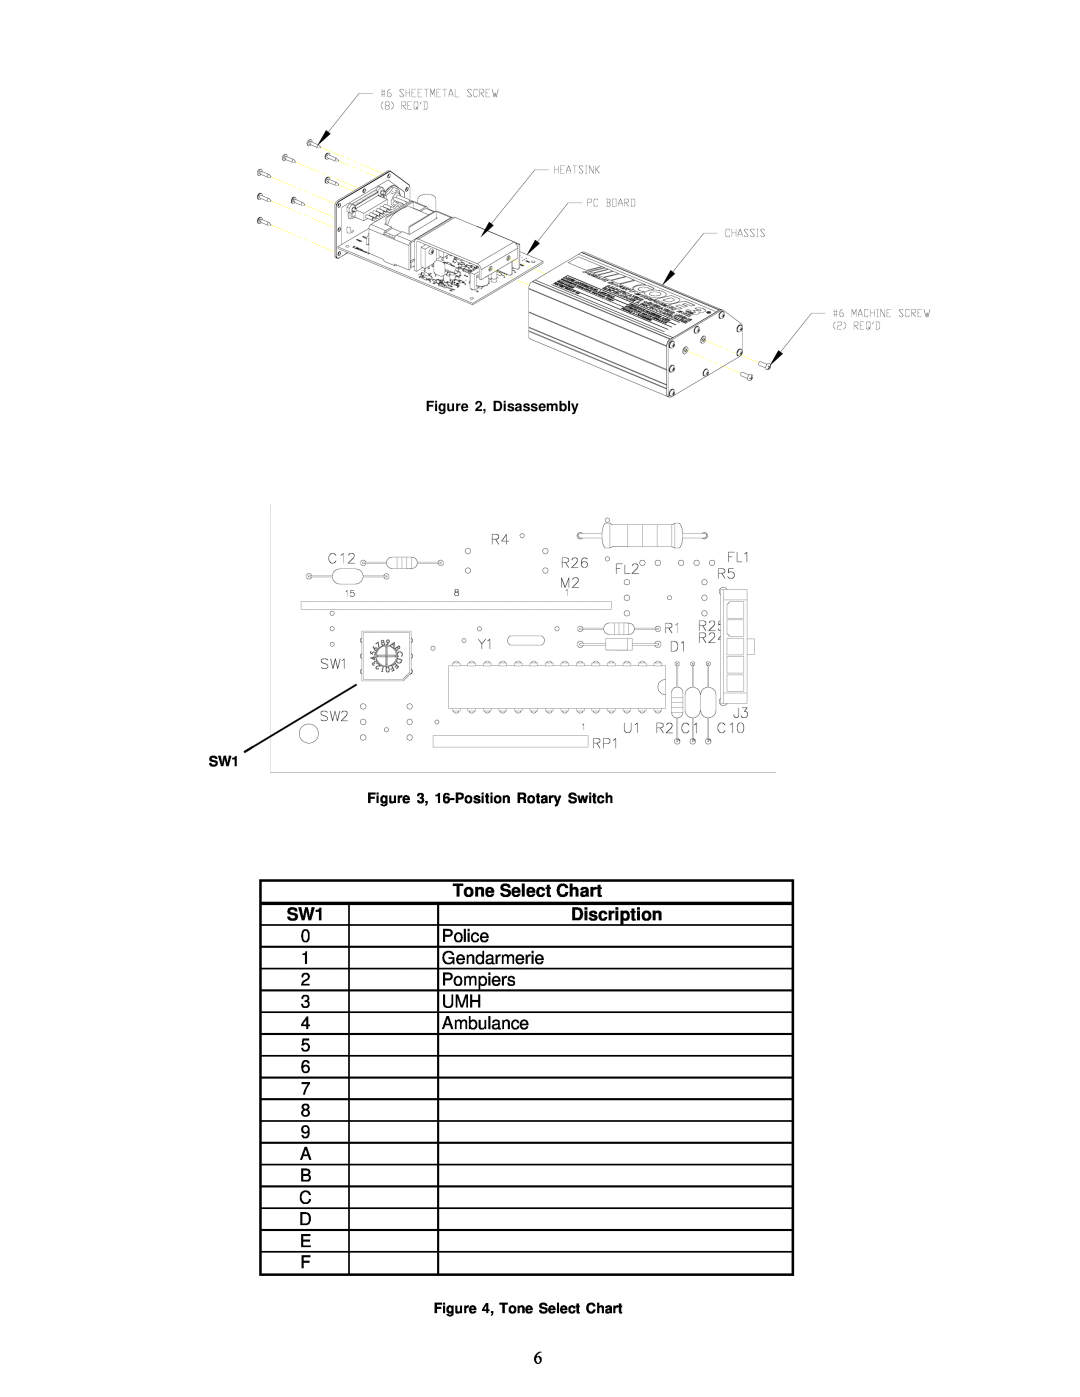 Bosch Appliances 4000 operation manual Tone Select Chart, Discription 